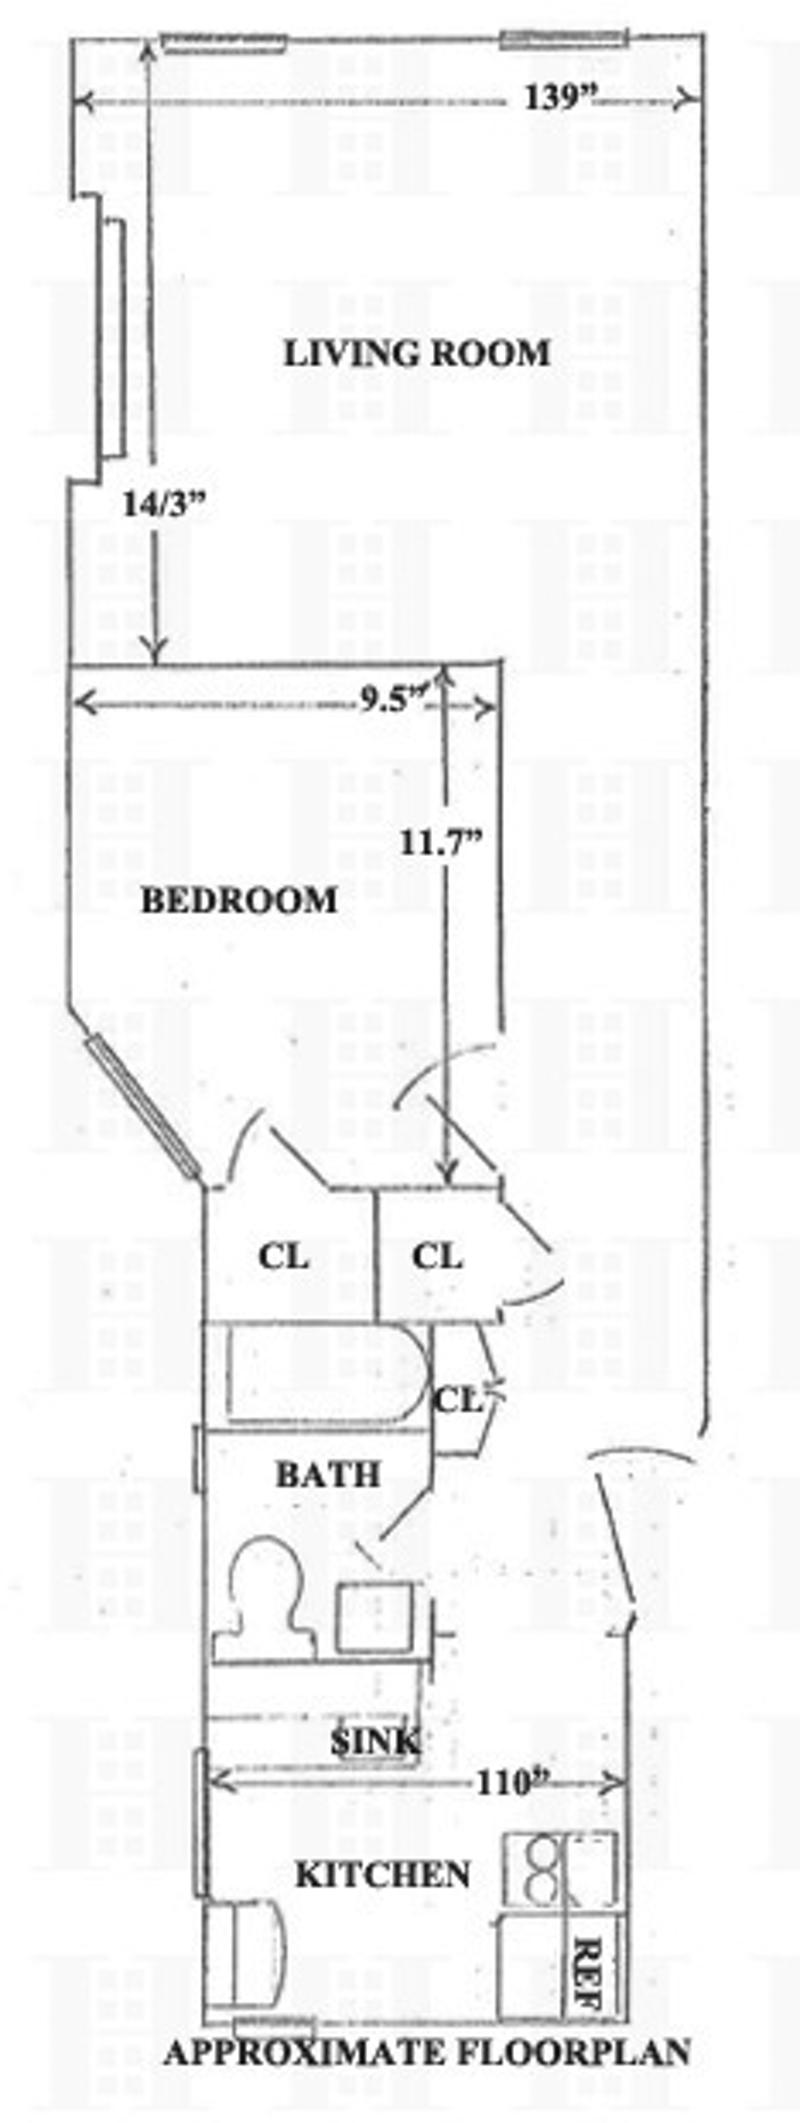 Floorplan for 19 Greenwich Avenue, 4A